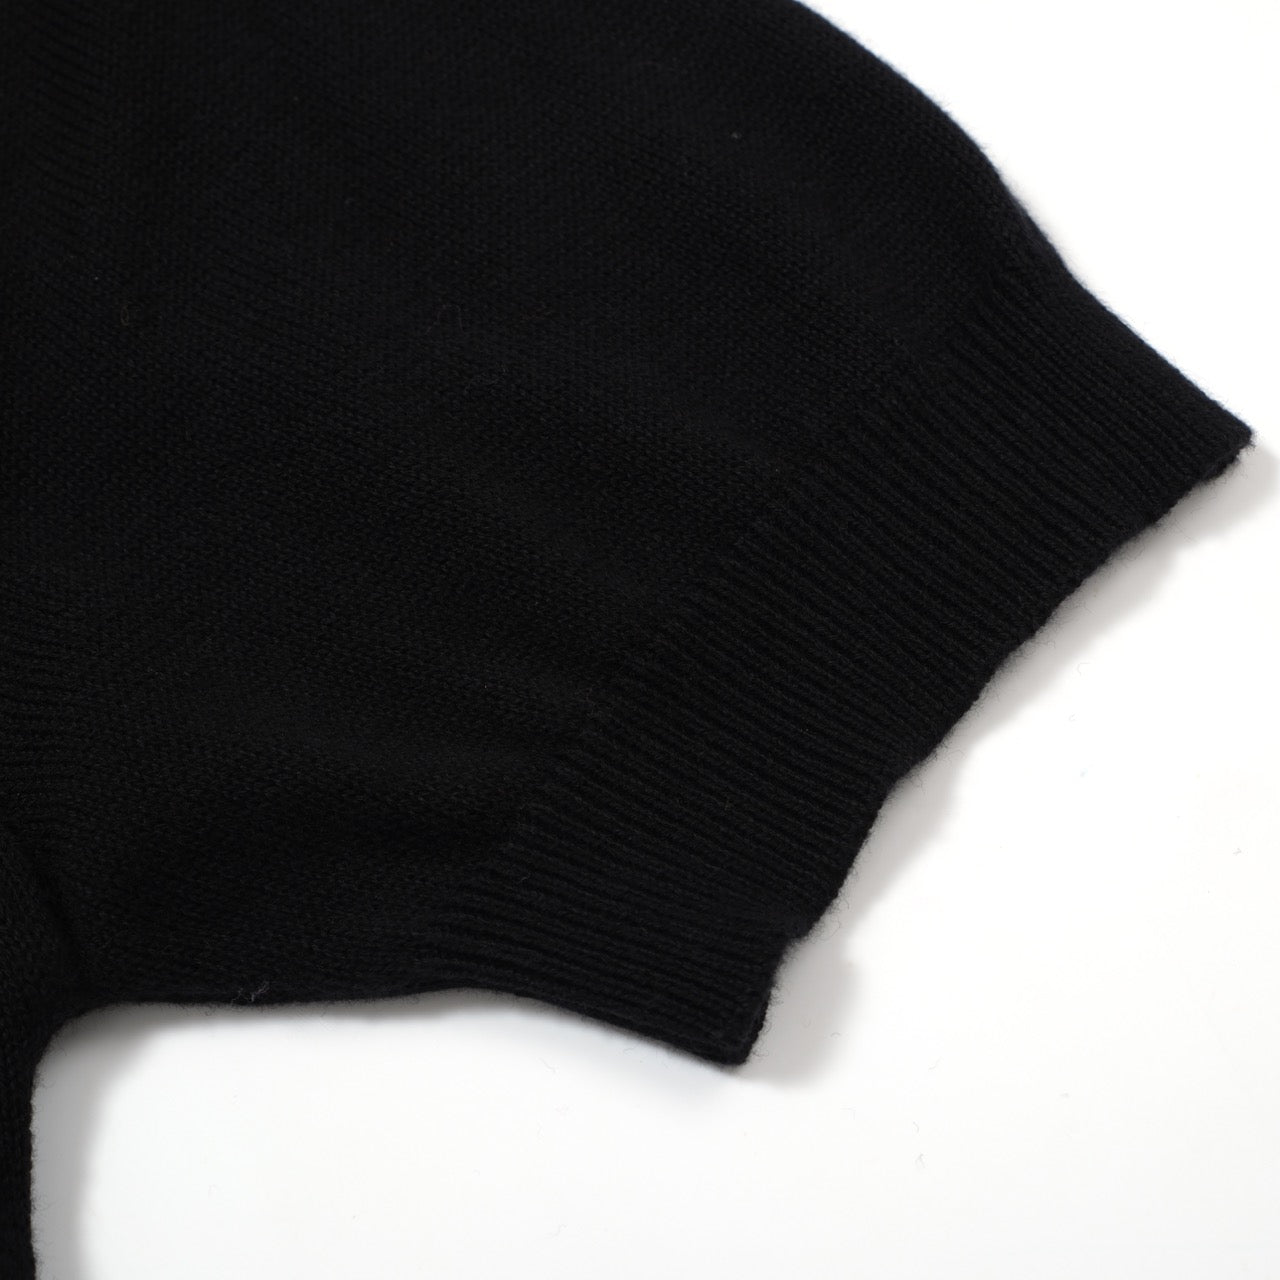 OXKNIT Women Vintage Clothing 1960s Mod Style Casual Black Lighting Short Sleeves Knitwear Retro Tshirt